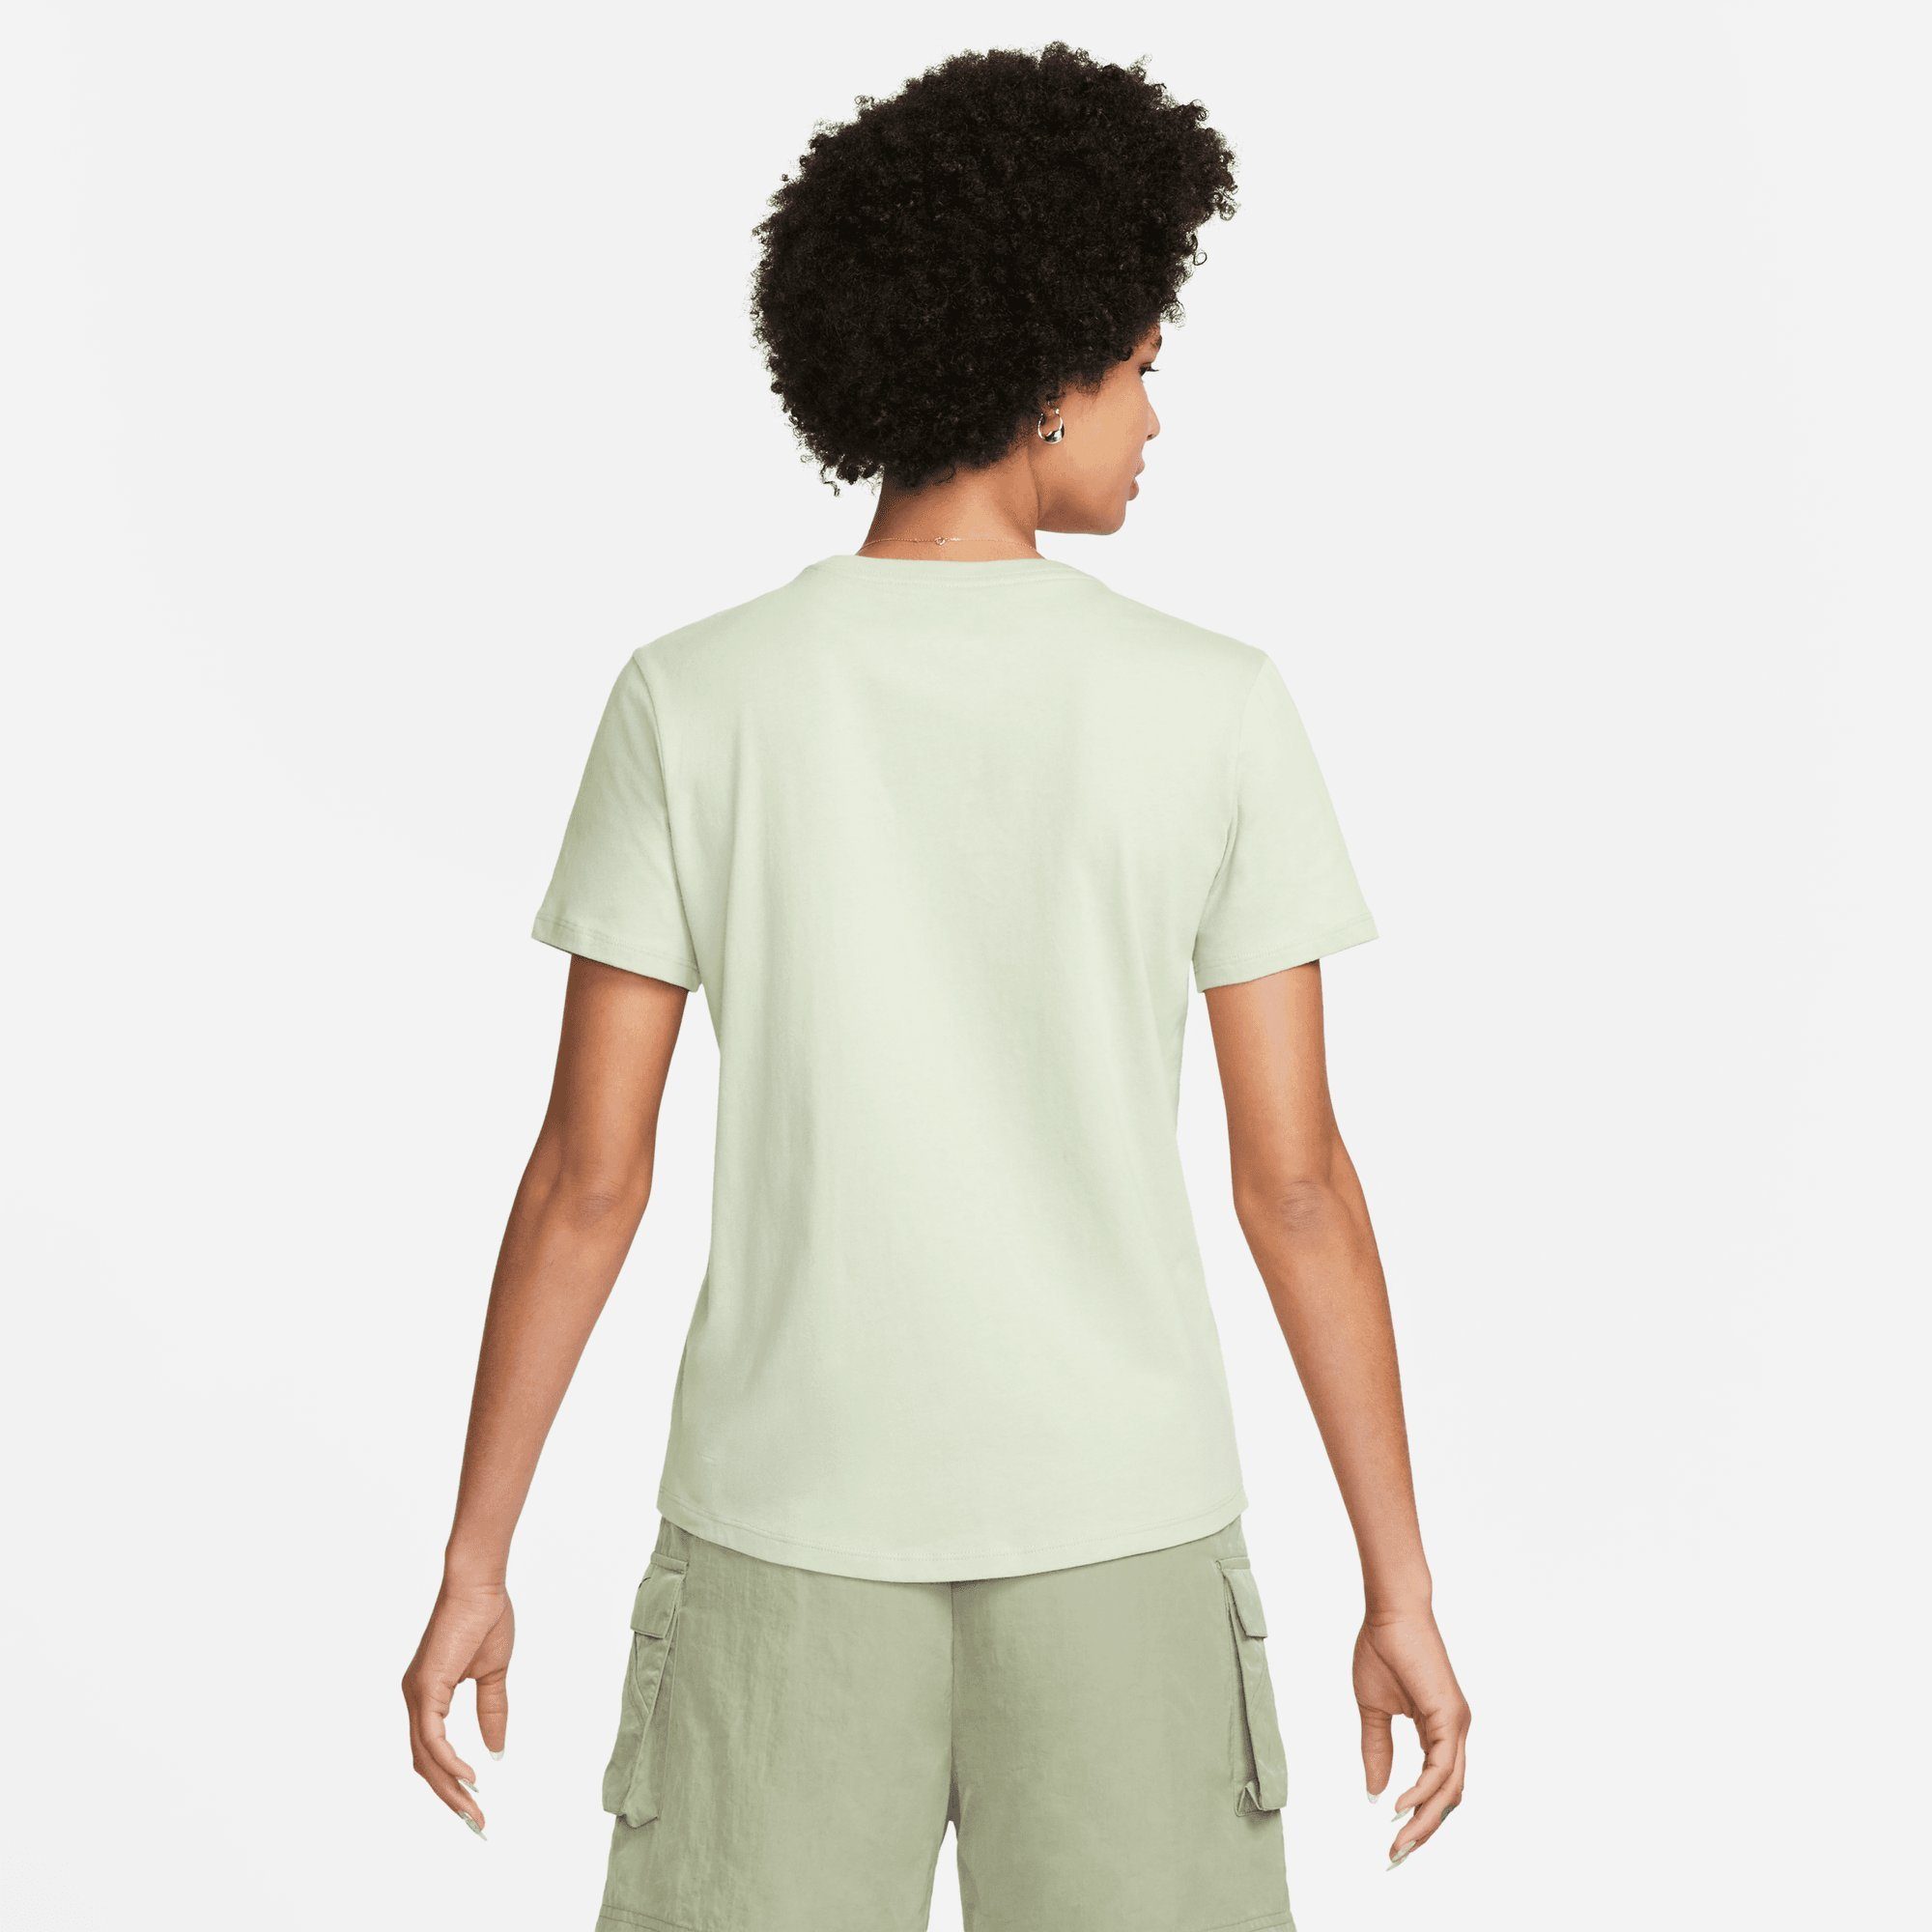 HONEYDEW/WHITE Sportswear Nike T-SHIRT ESSENTIALS WOMEN'S T-Shirt LOGO